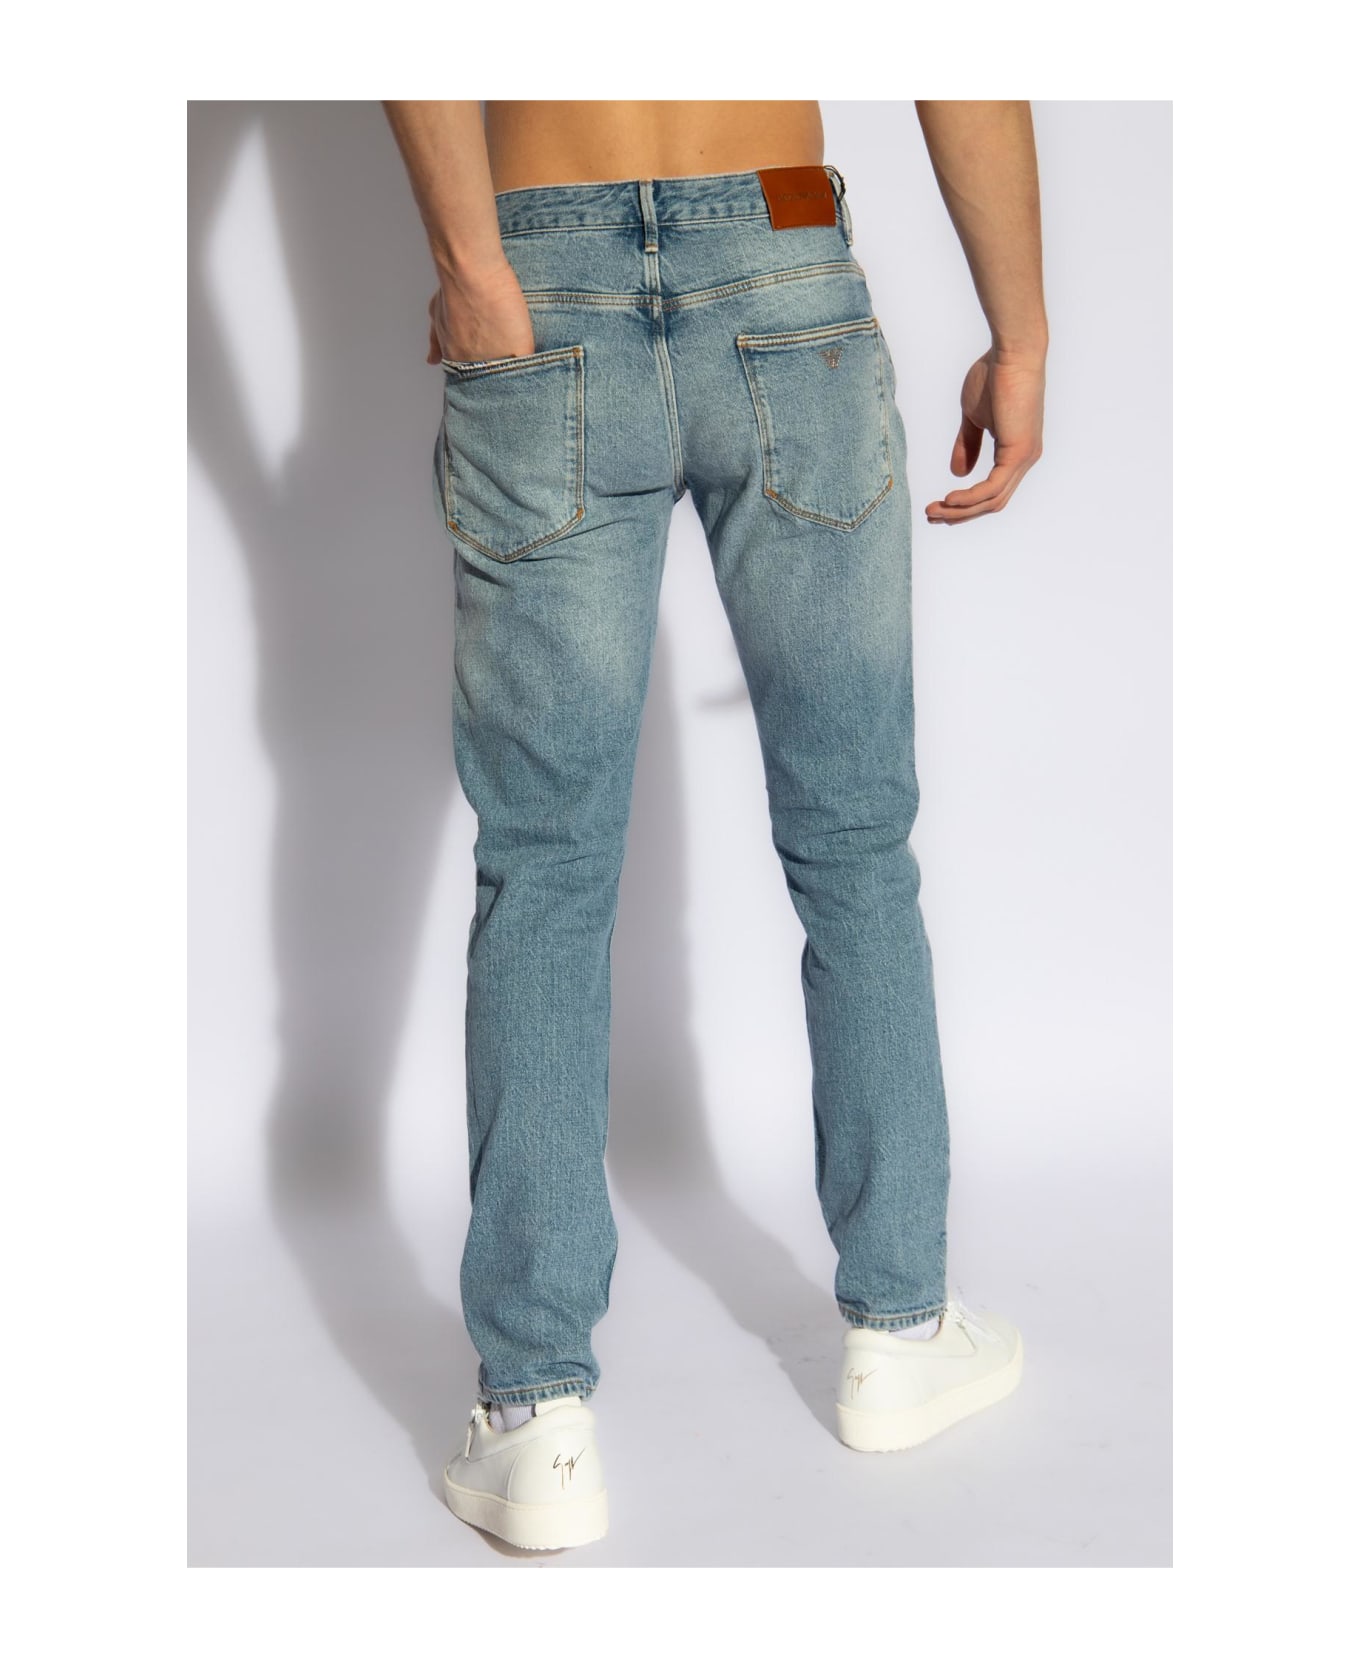 Emporio Armani Slim-fit Jeans - Stone Washed デニム